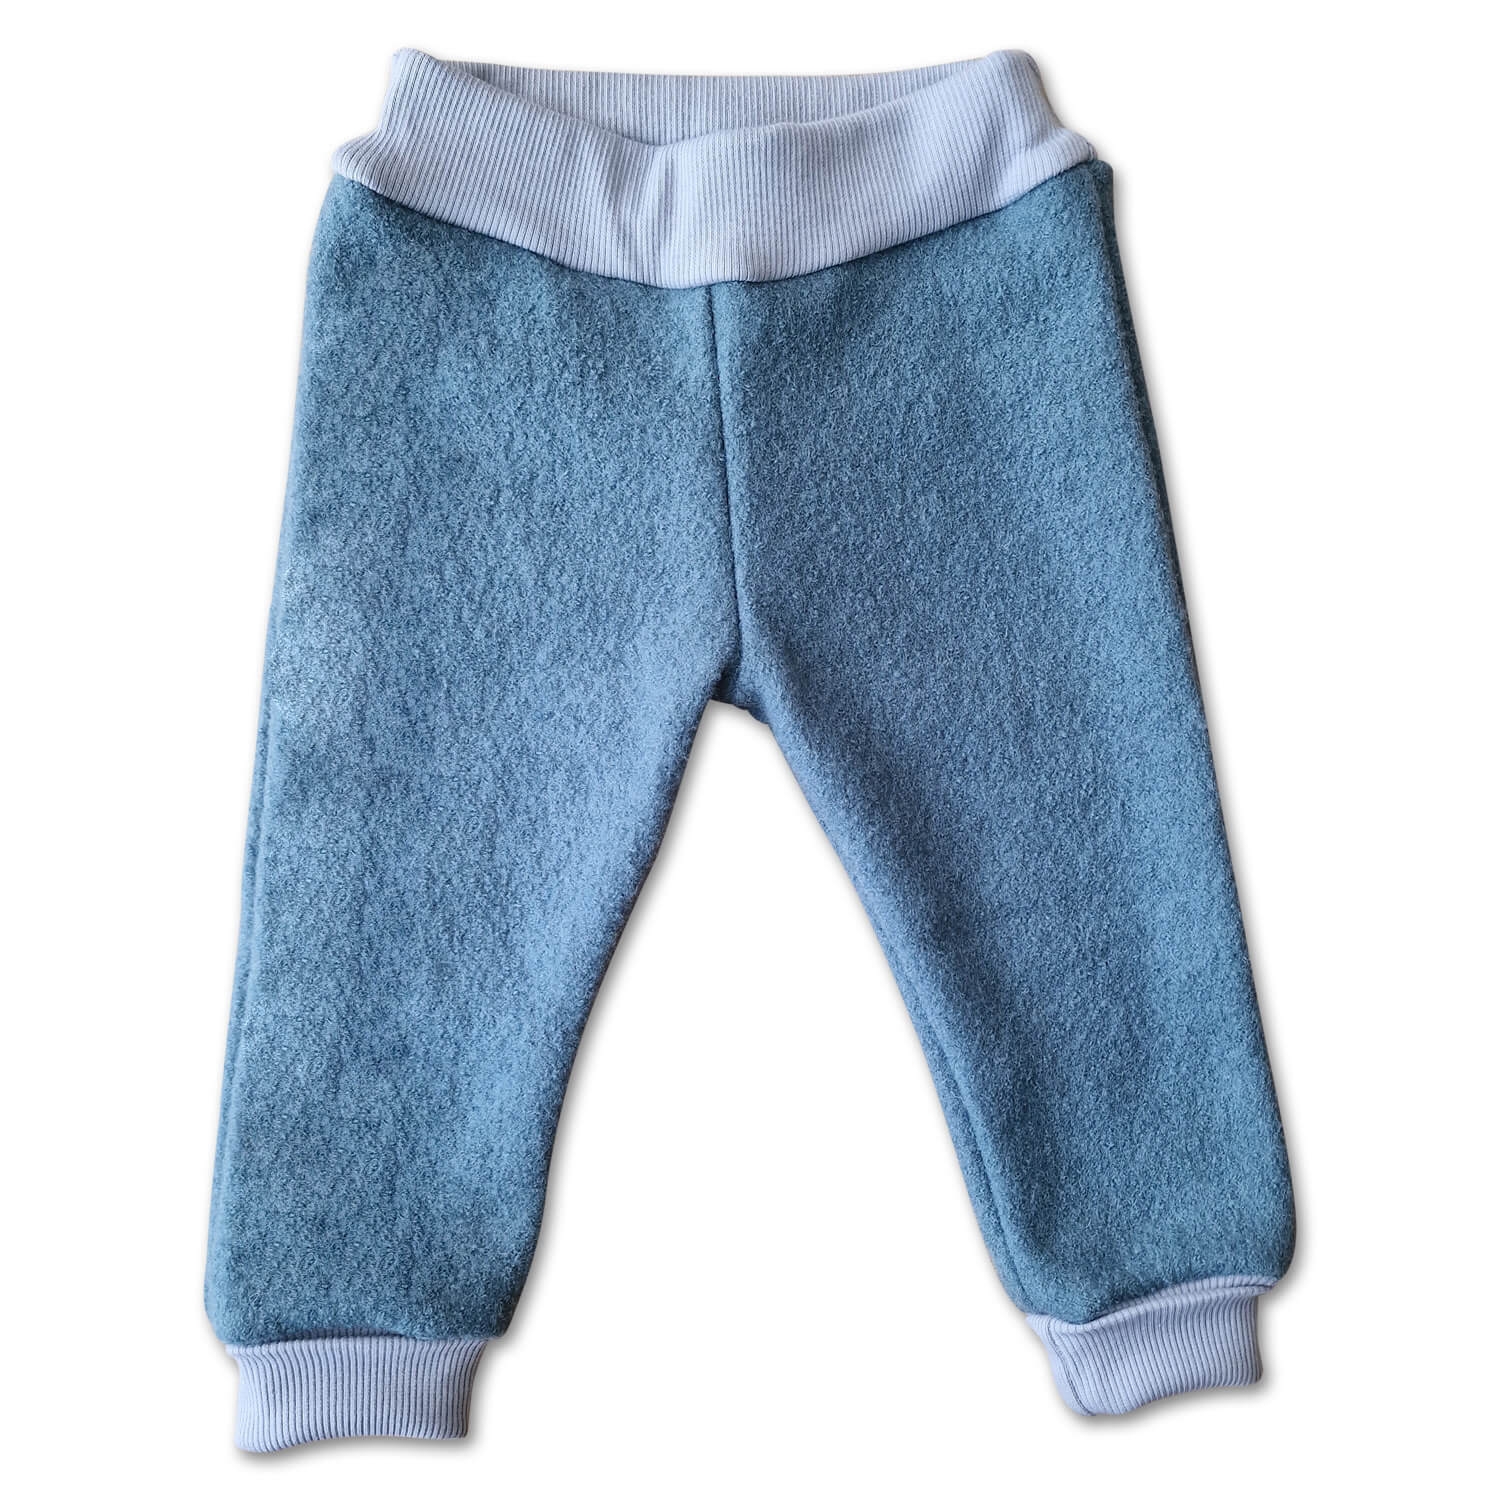 Pantaloni dublati din lana fiarta pentru copii Kidizi old mint 1-2 ani